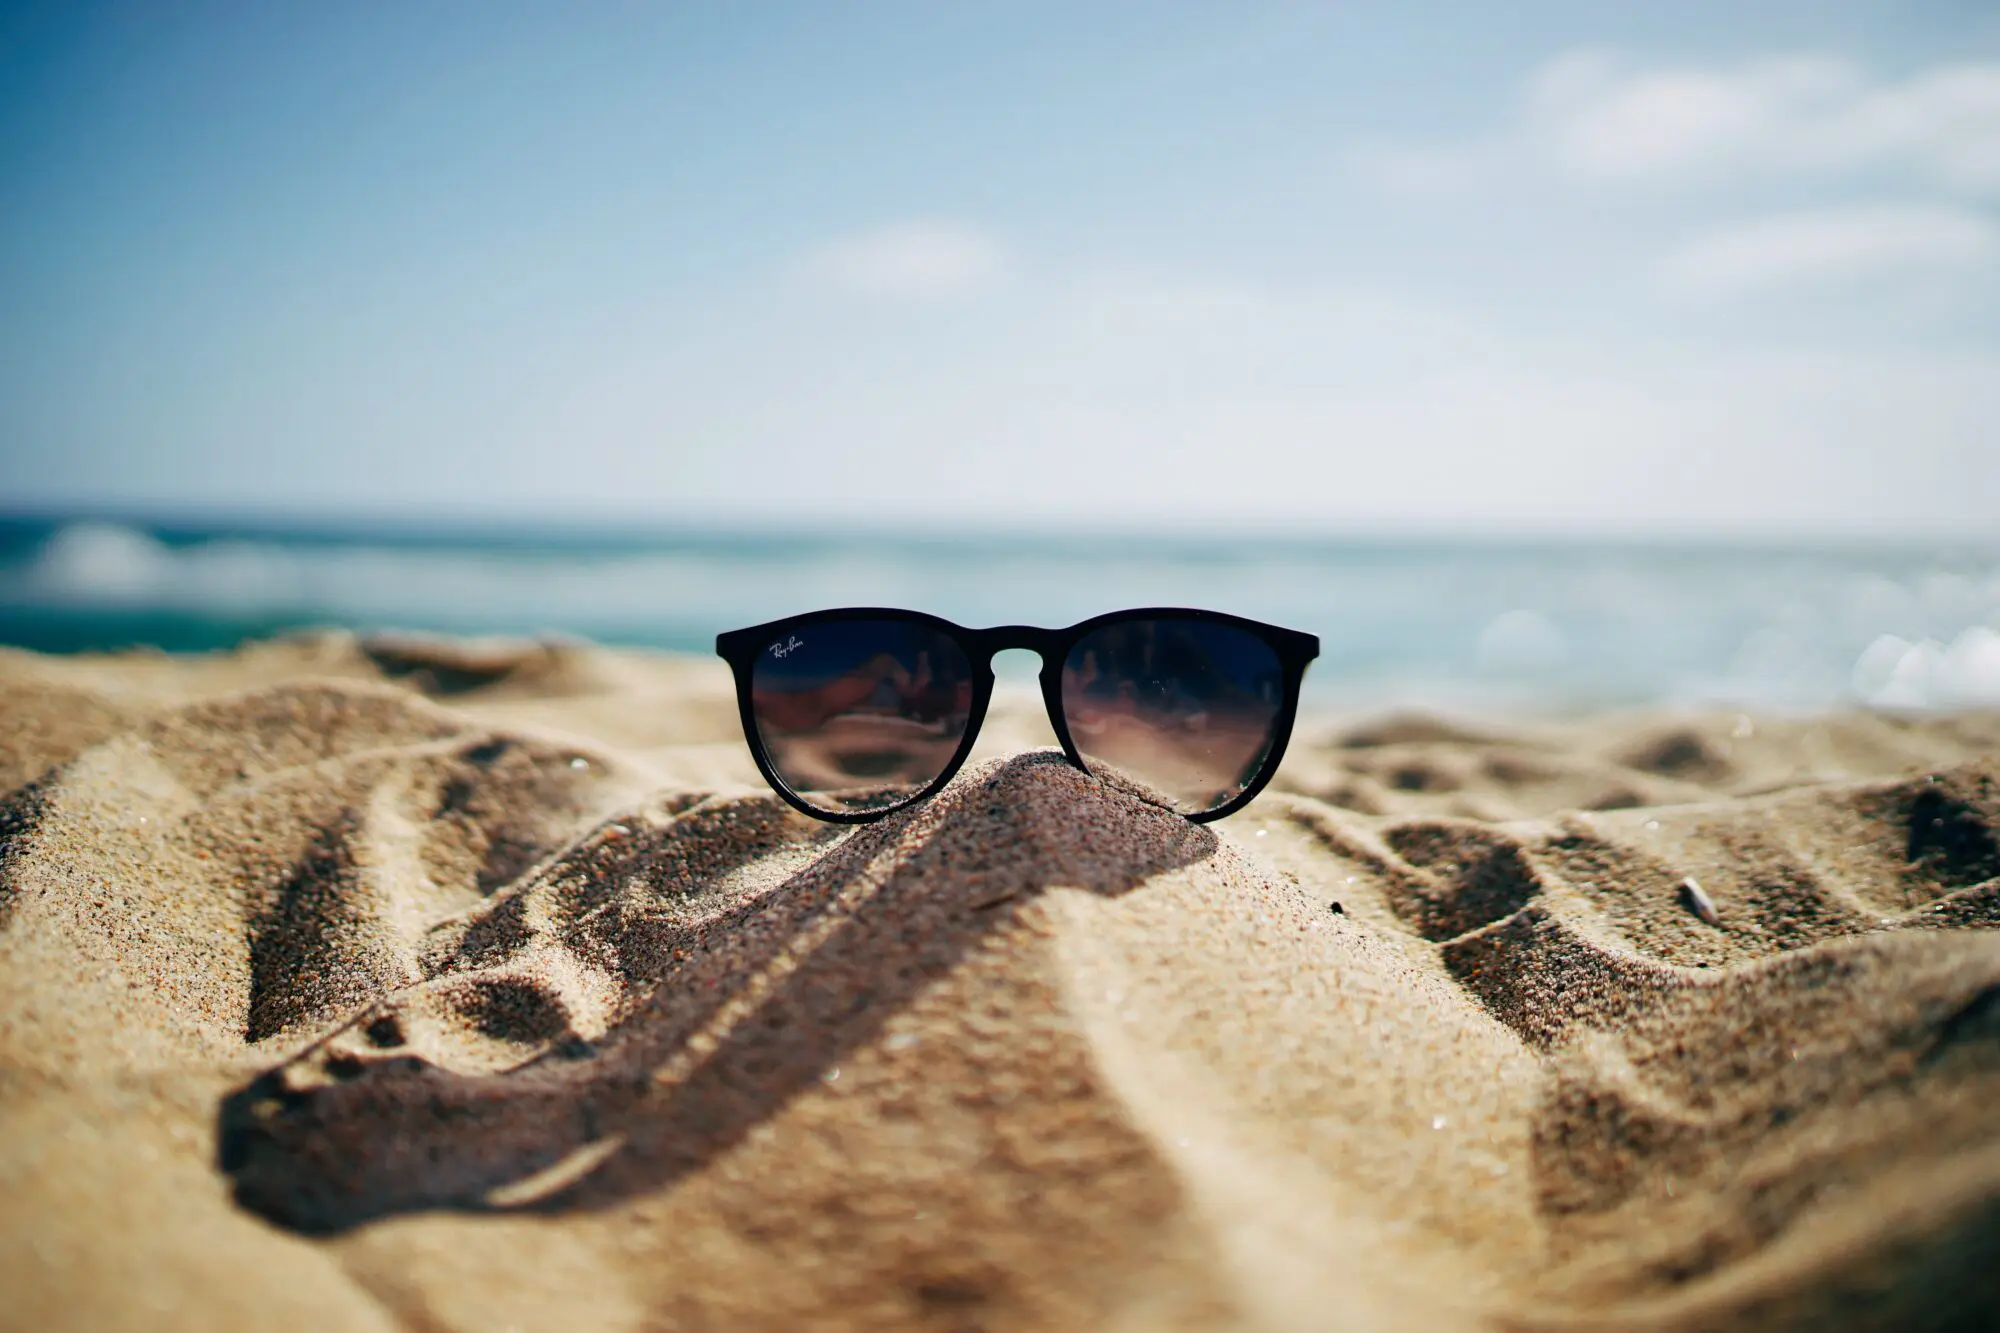 Sunglasses placed on a beach